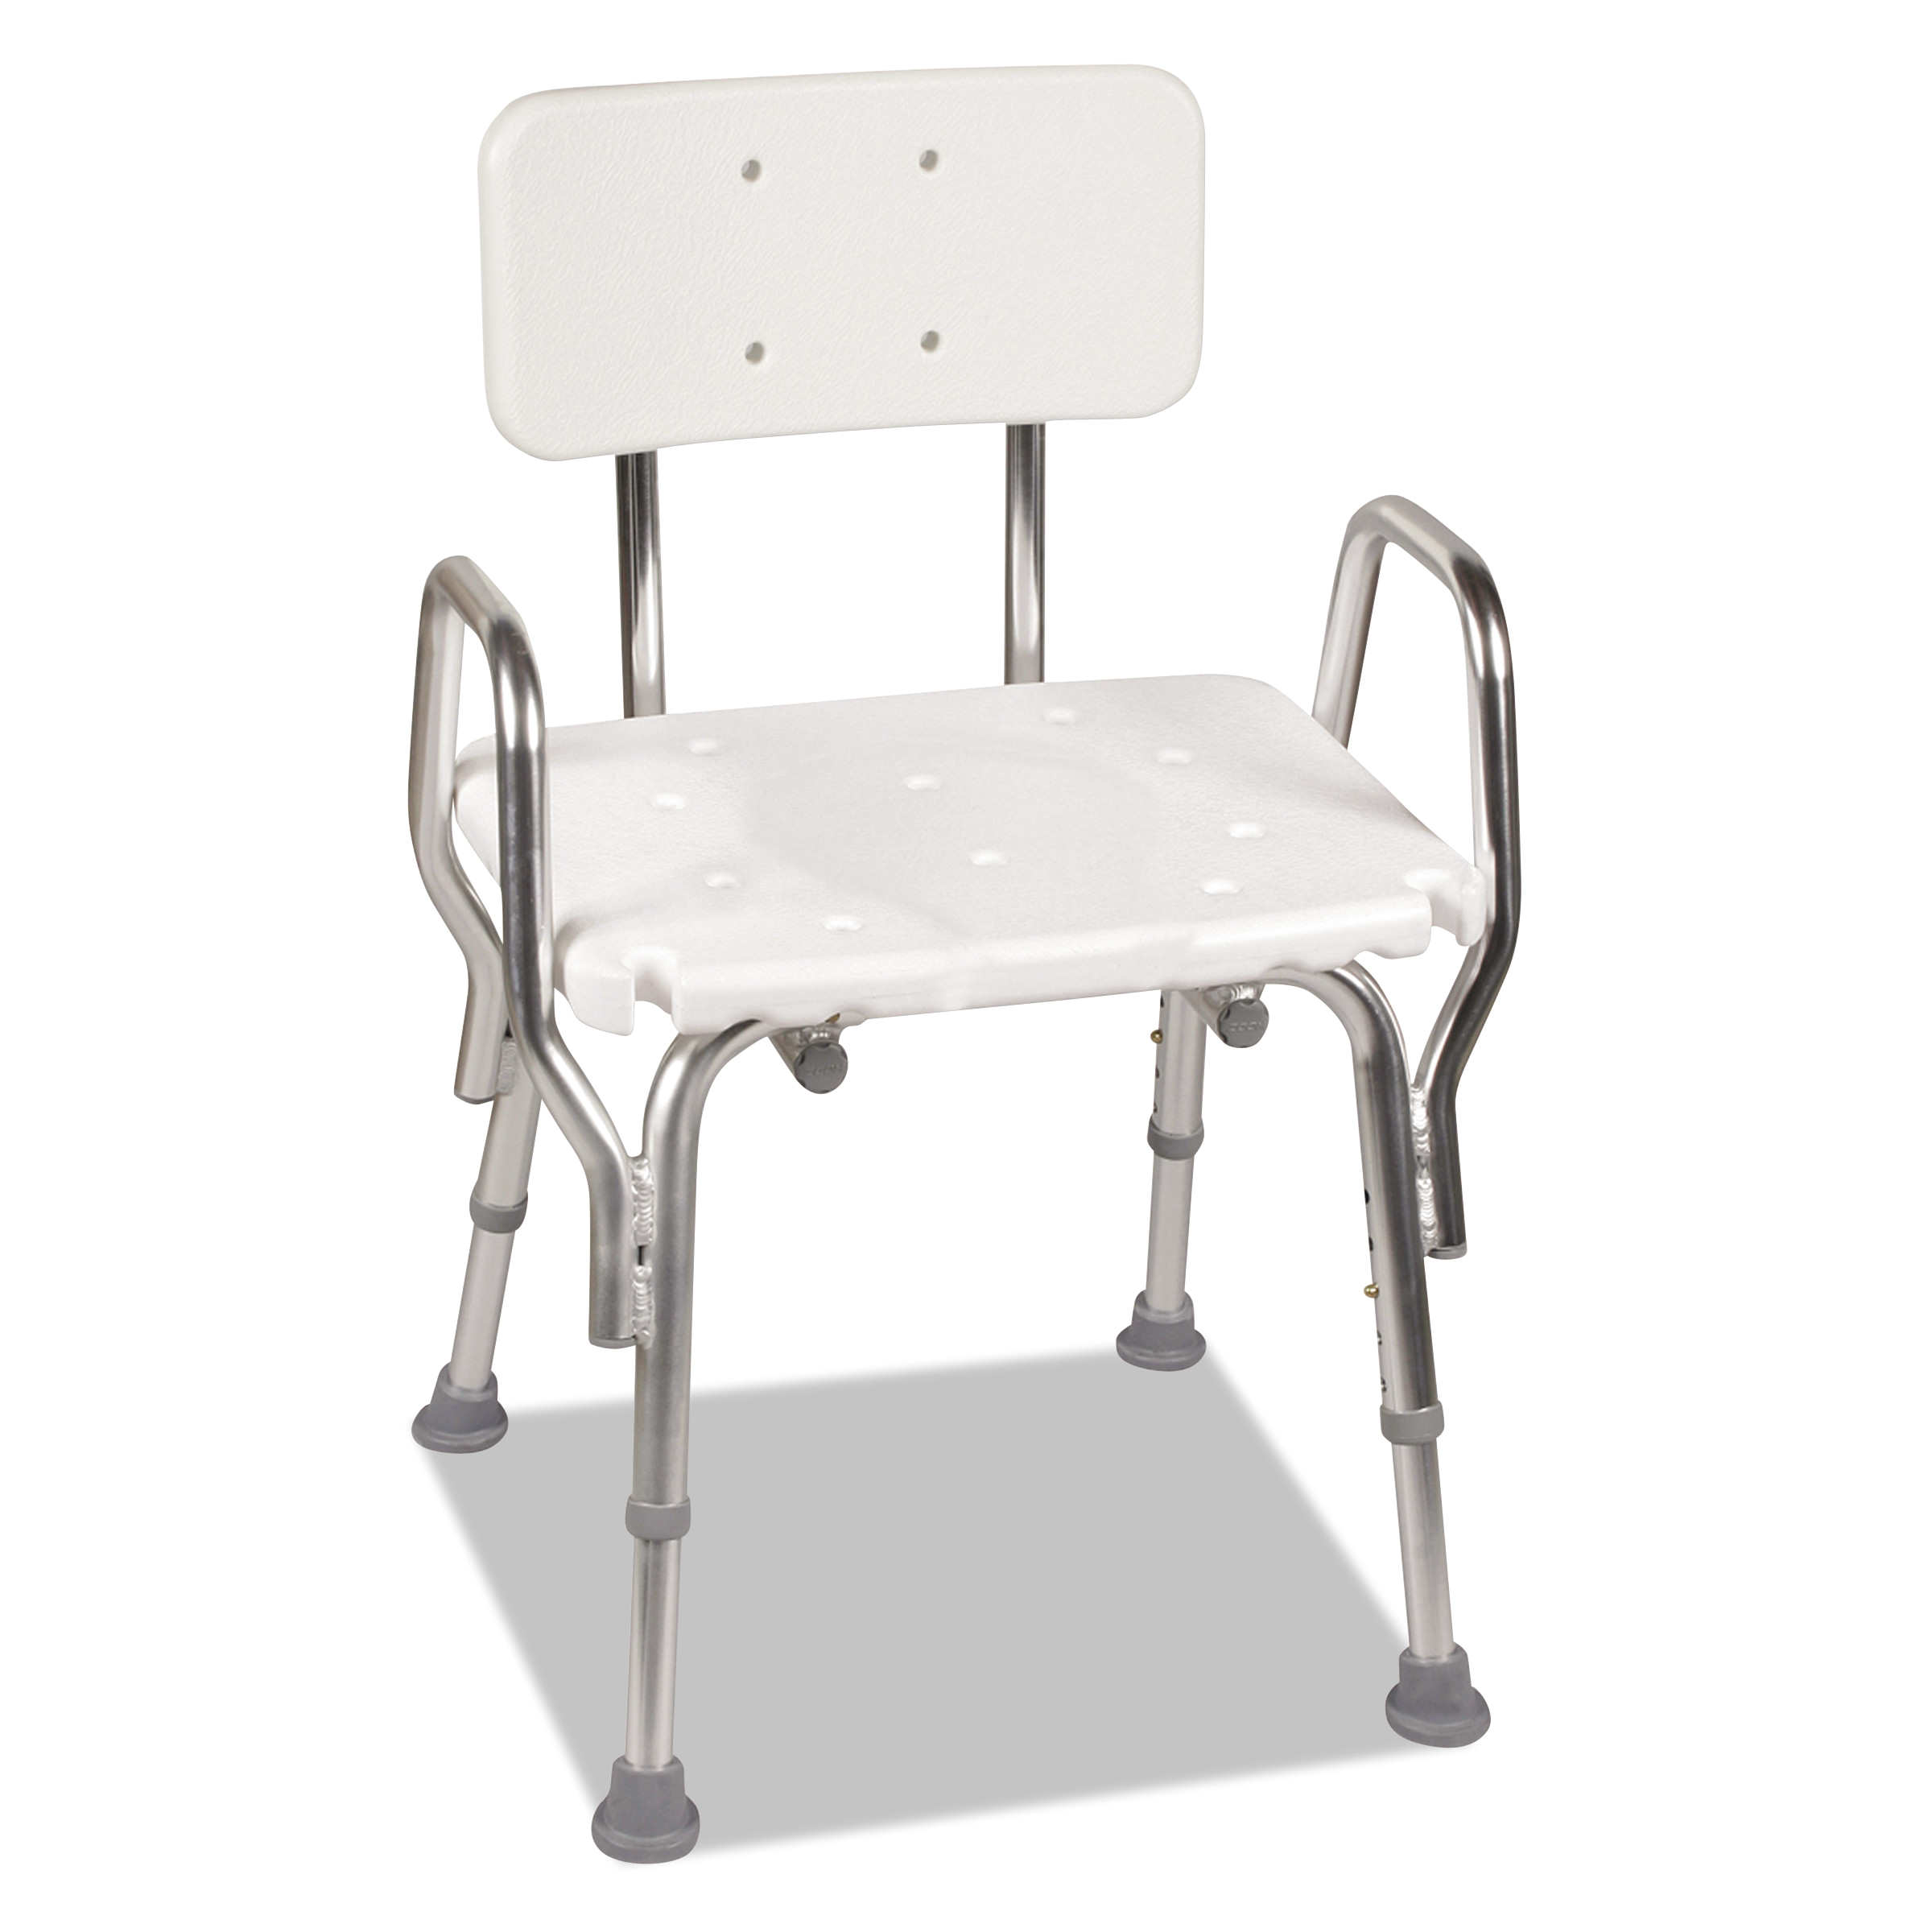 Chair for Bathtub Walmart Bathroom Adjustable Bath and Shower Chair with Shower